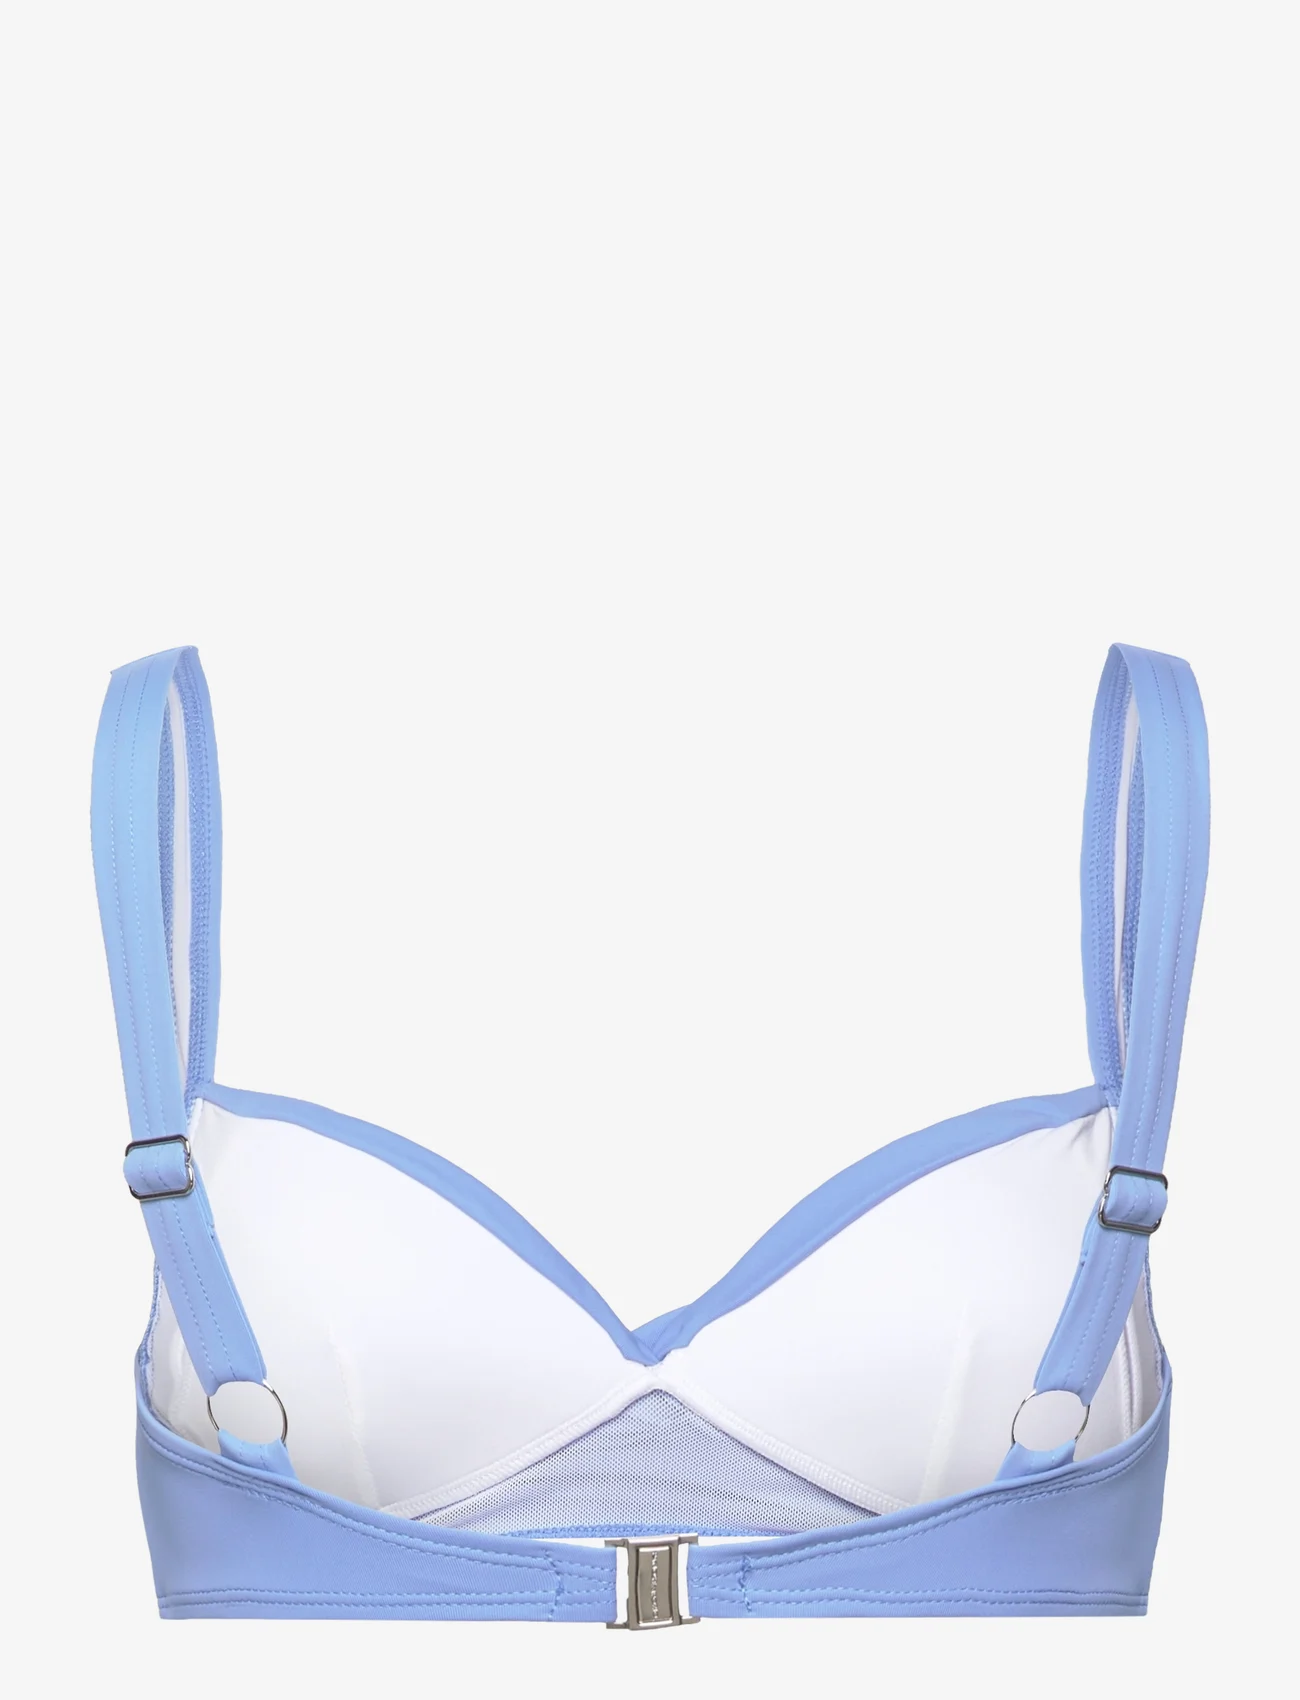 Panos Emporio - Medea Solid Top - push-up-bikinis - blue bell - 1